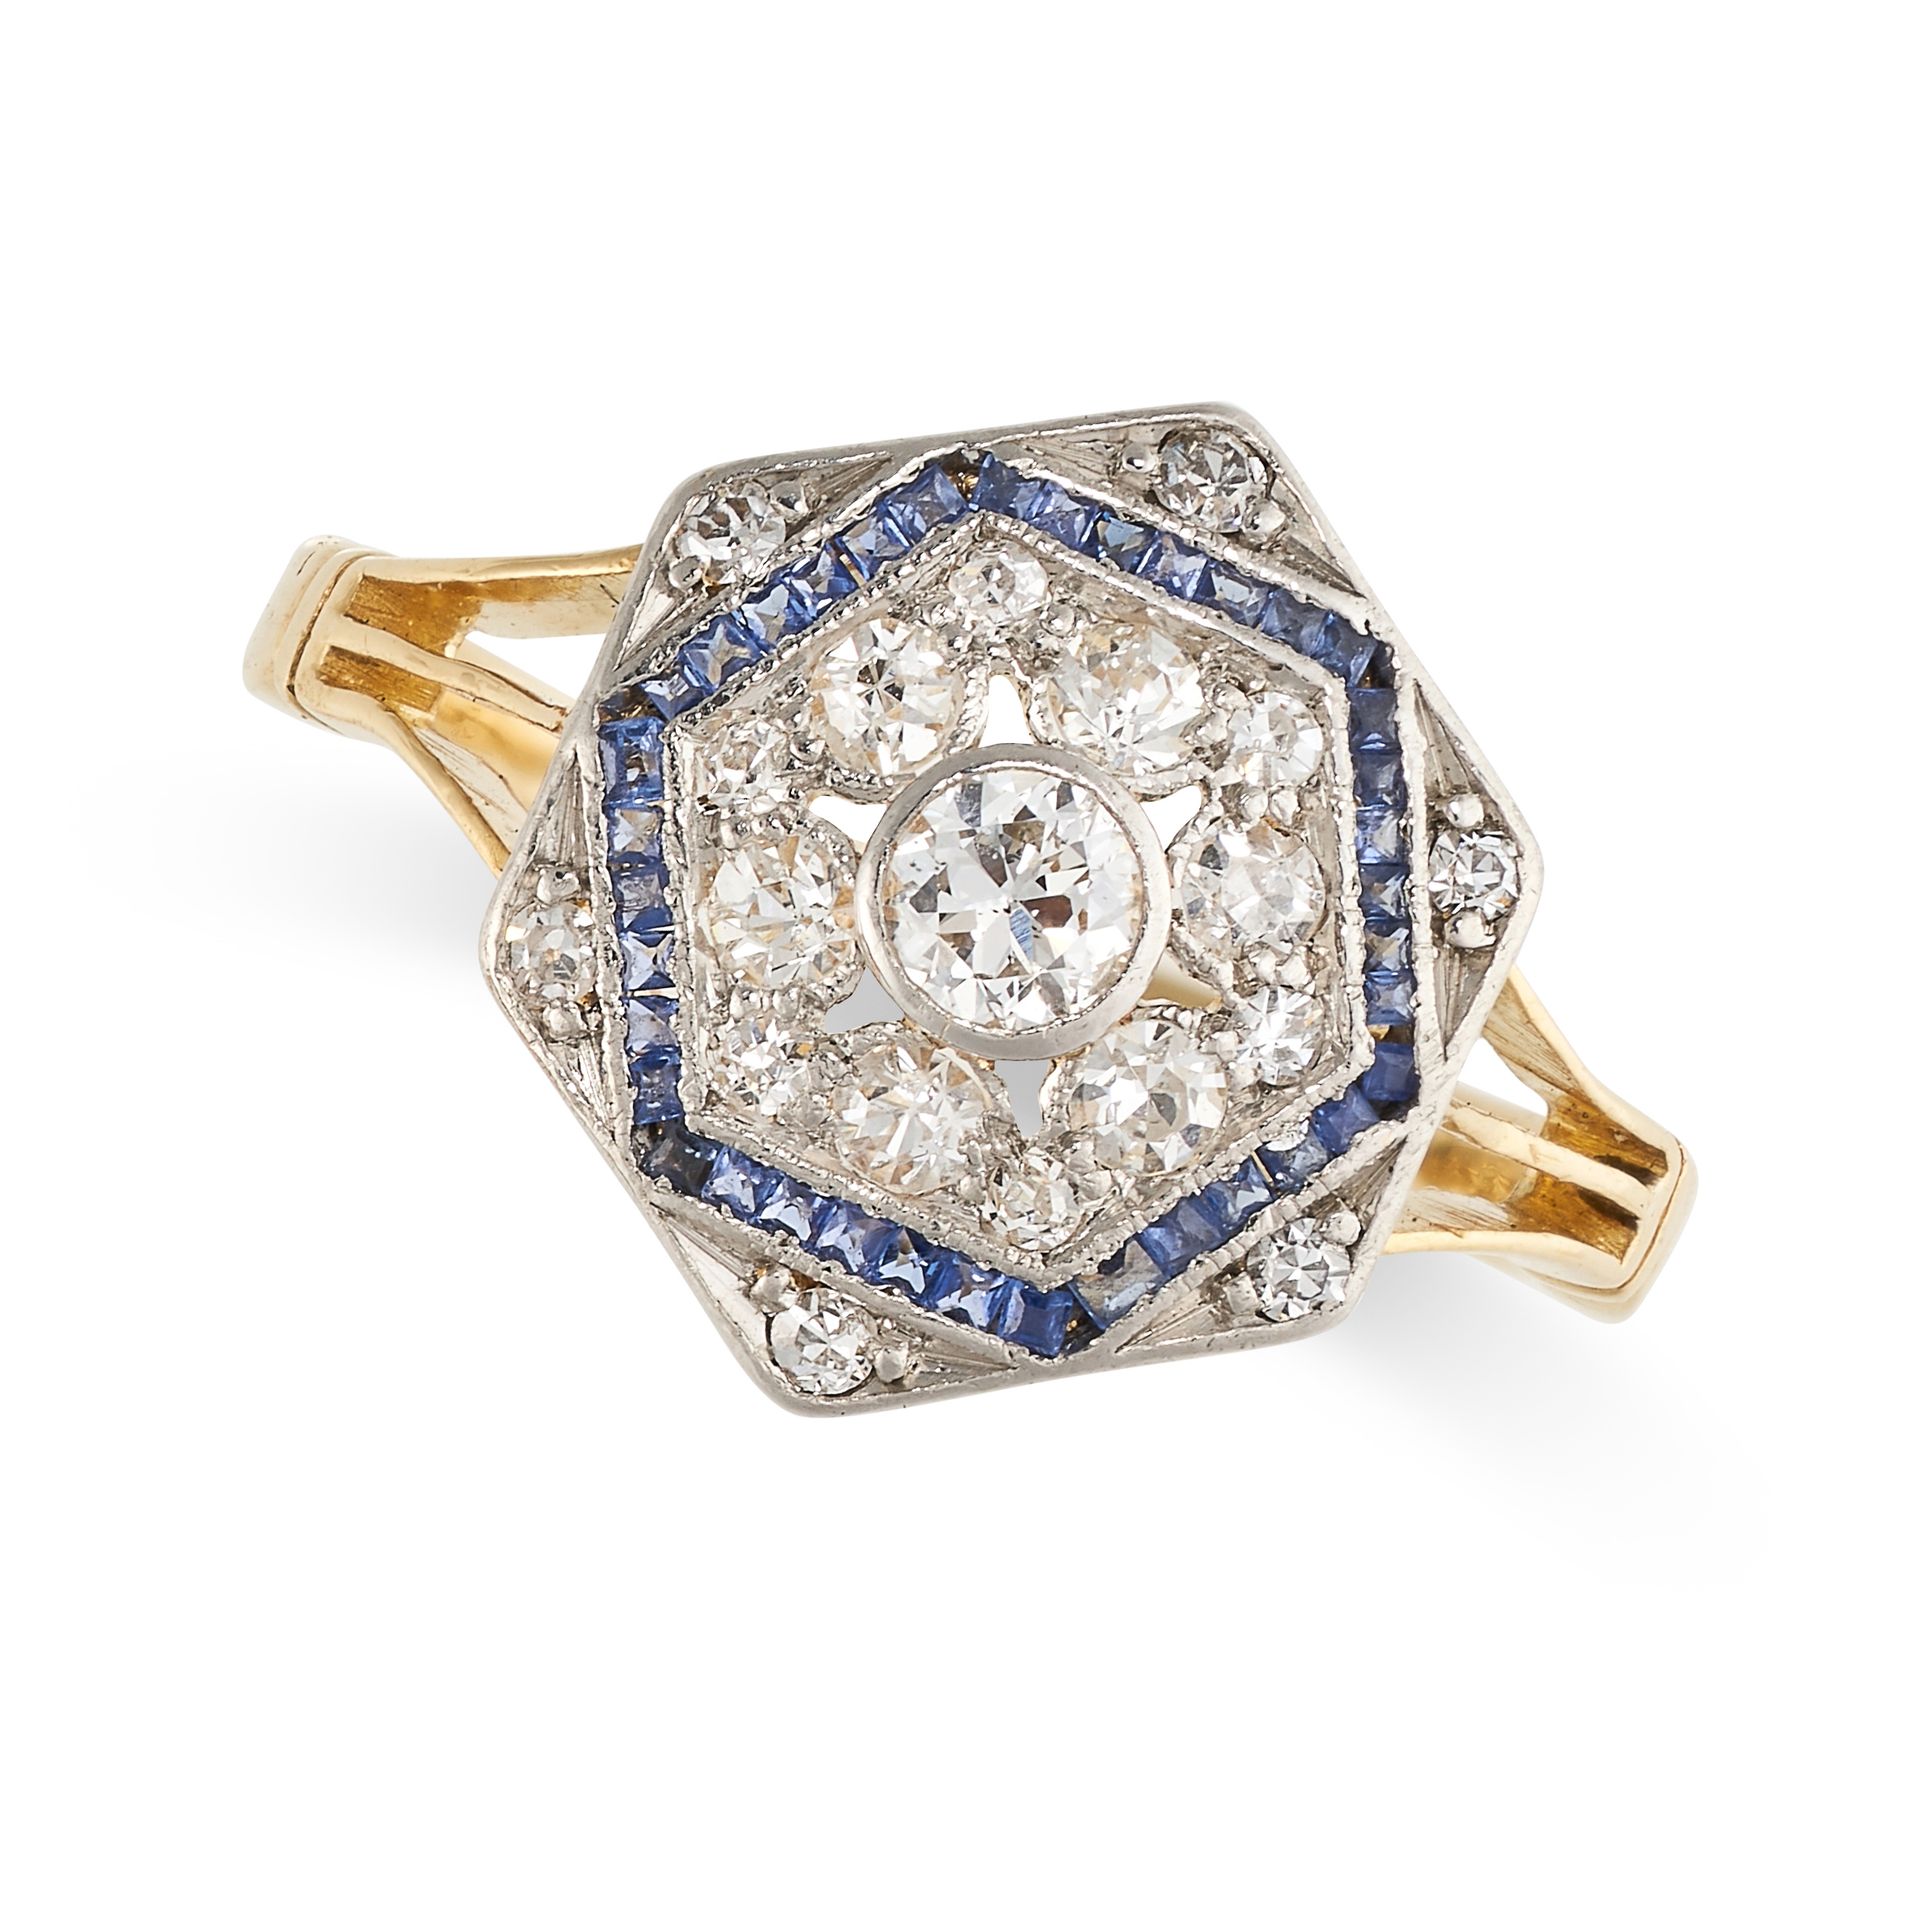 Null 无保留 - 18K黄金和铂金装饰钻石和蓝宝石戒指，六边形的表面上镶嵌着一颗中央的圆形切割钻石，周围是同心圆切割的钻石和阶梯式切割的蓝色蓝宝石，没有化验&hellip;